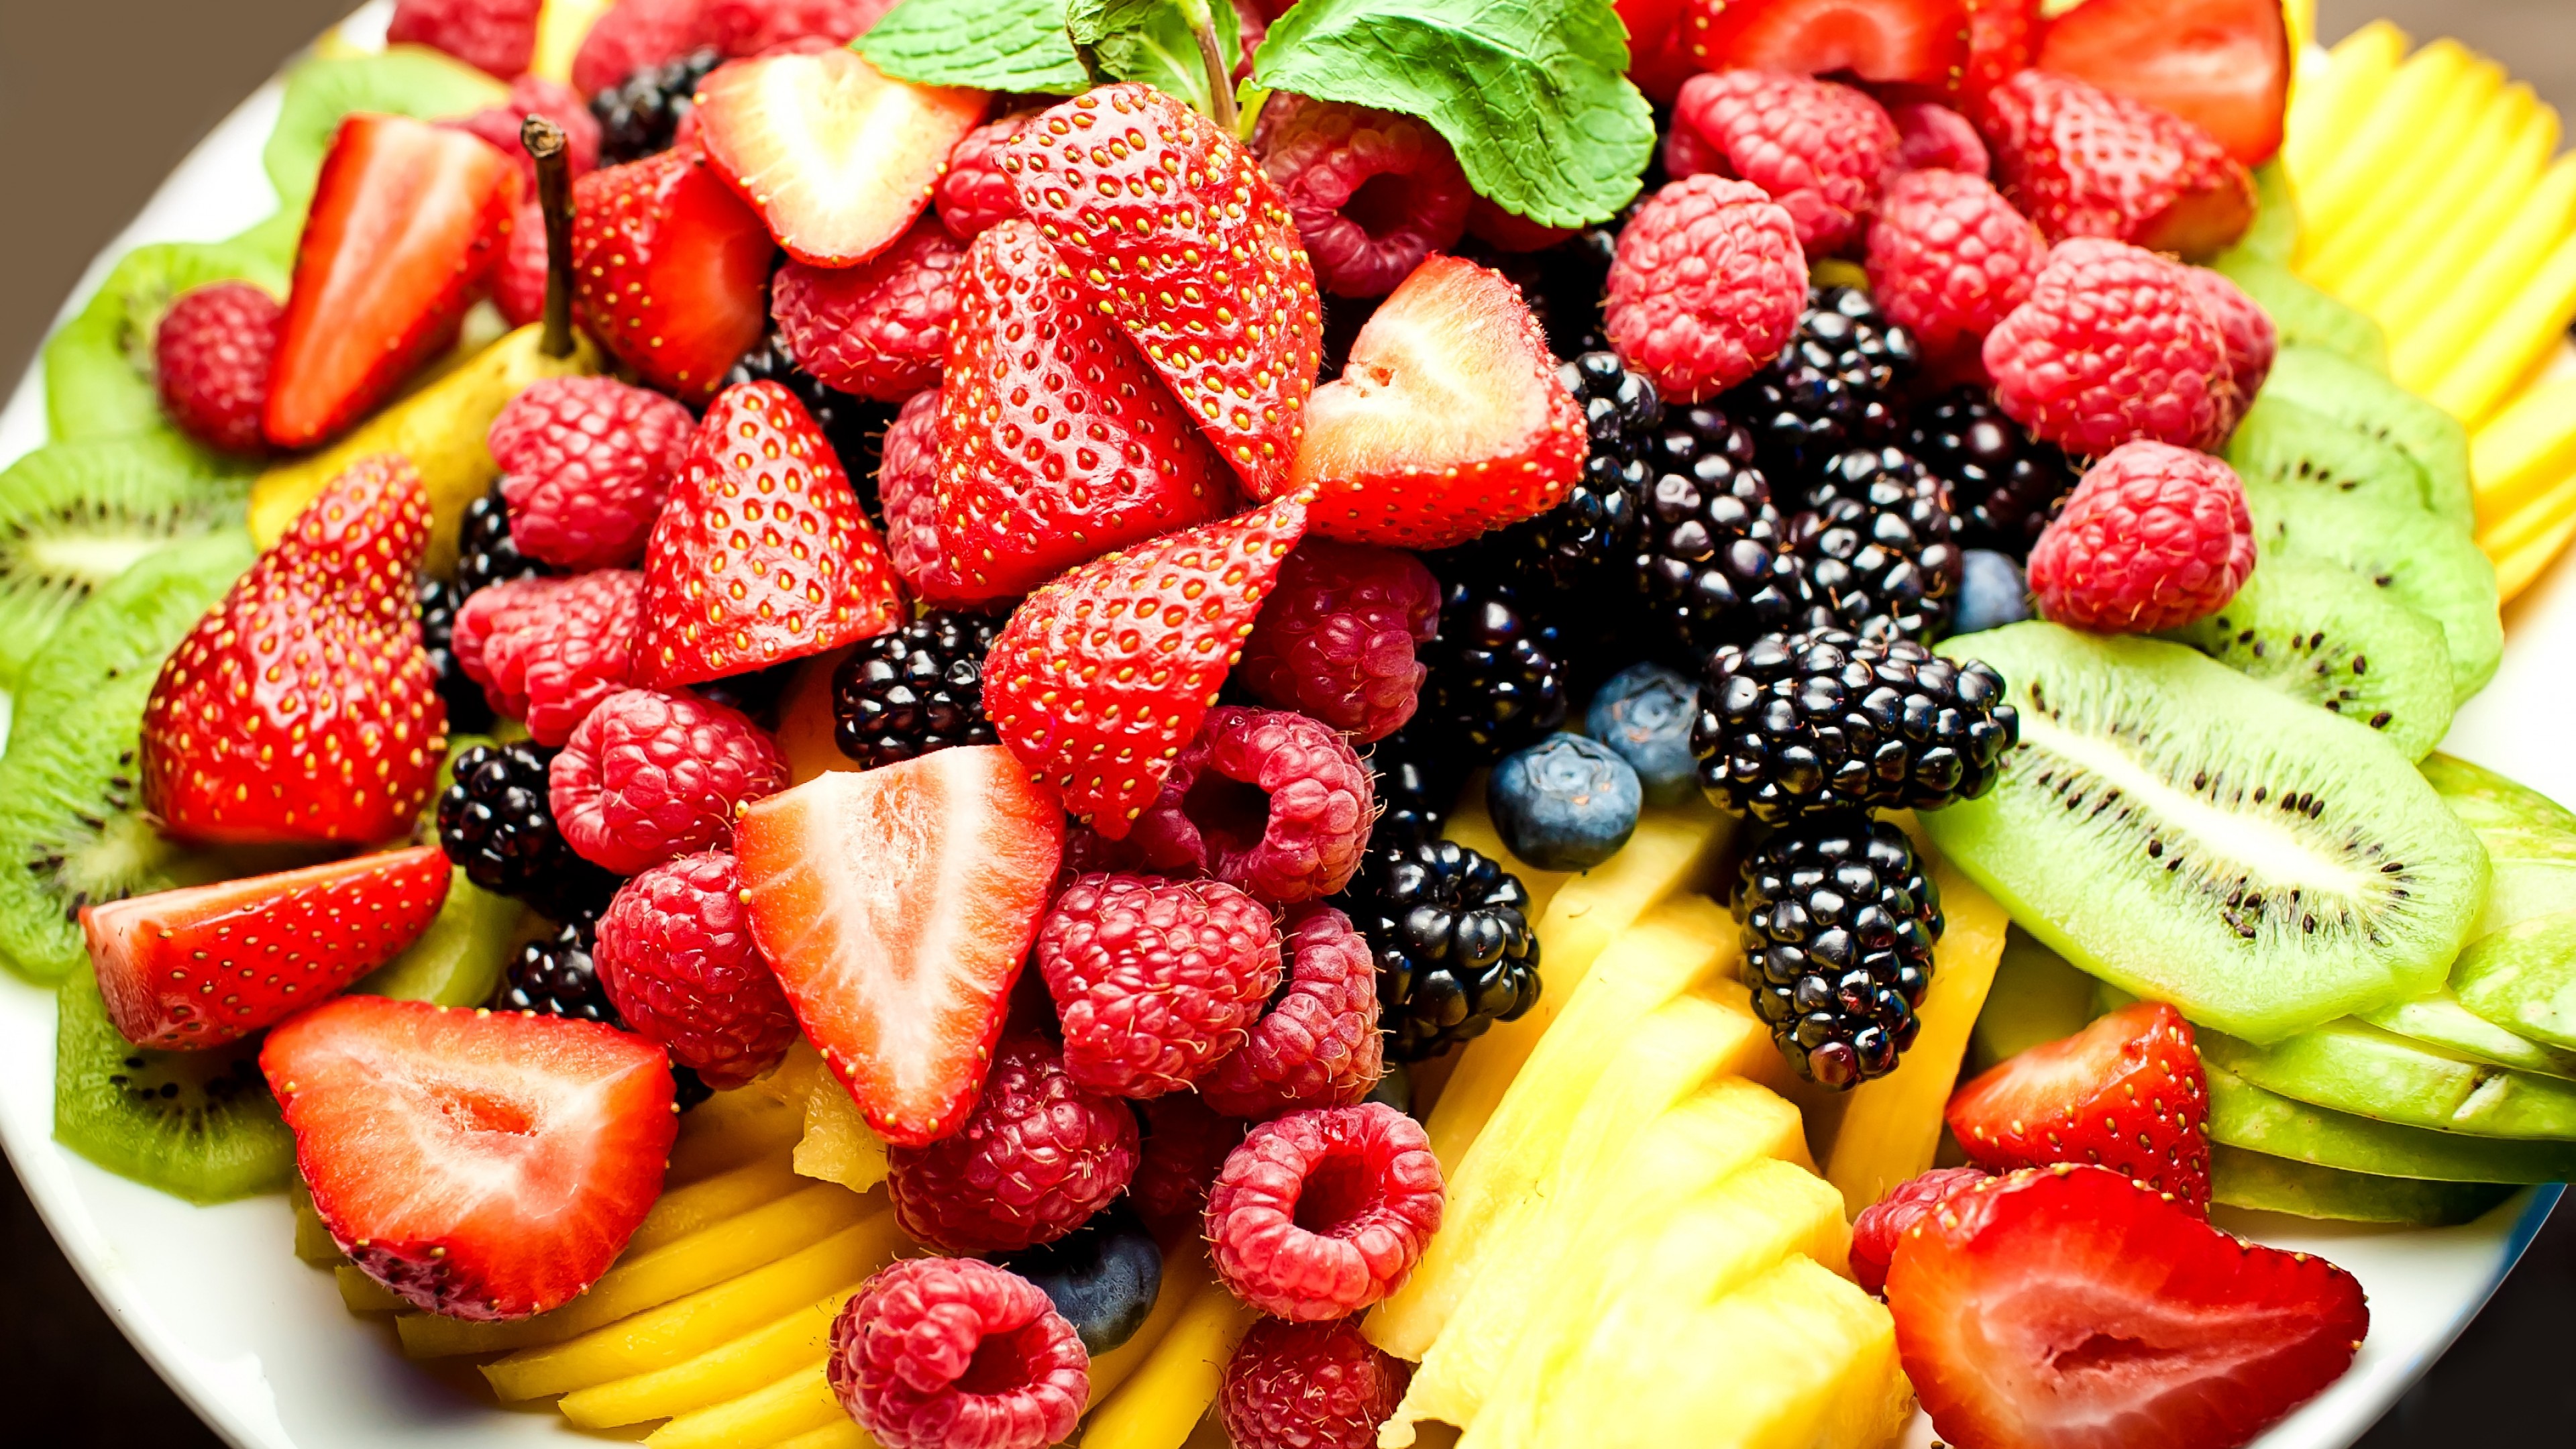 Картинки на обои. Яркие фрукты. Красивые яркие фрукты. Сочные фрукты. Летние фрукты.